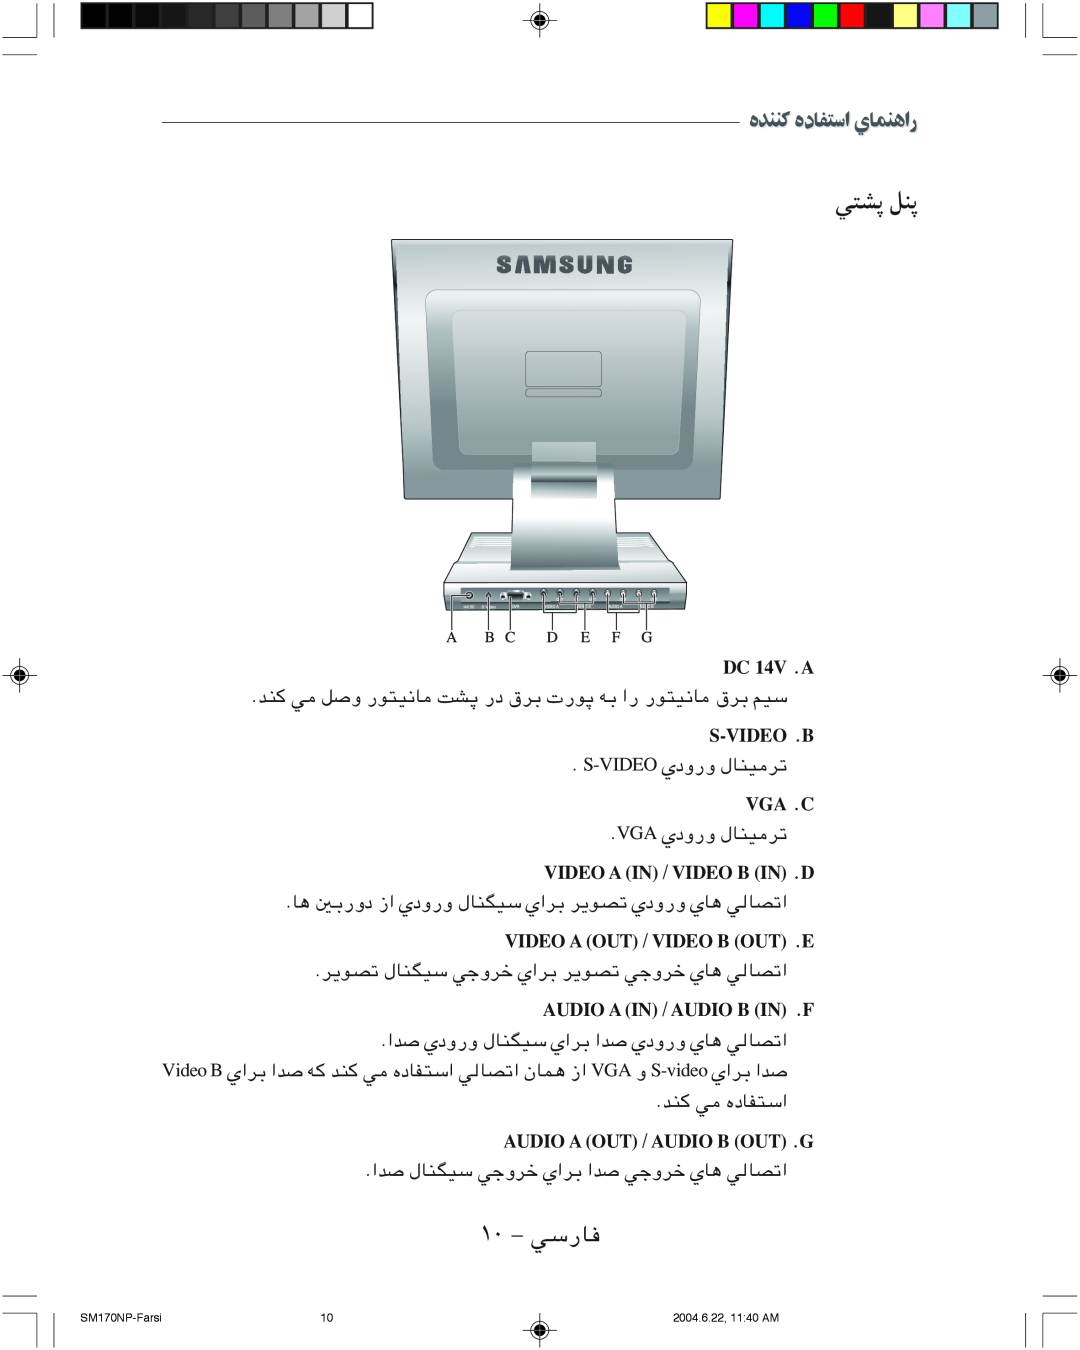 Samsung SMT-170P ﻲﺘﺸﭘ ﻞﻨﭘ, ۱۰ - ﻲﺳرﺎﻓ, DC 14V .A, S-Video .B, Vga .C, Video A In / Video B In .D, هﺪﻨﻨﻛ هدﺎﻔﺘﺳا يﺎﻤﻨﻫار 